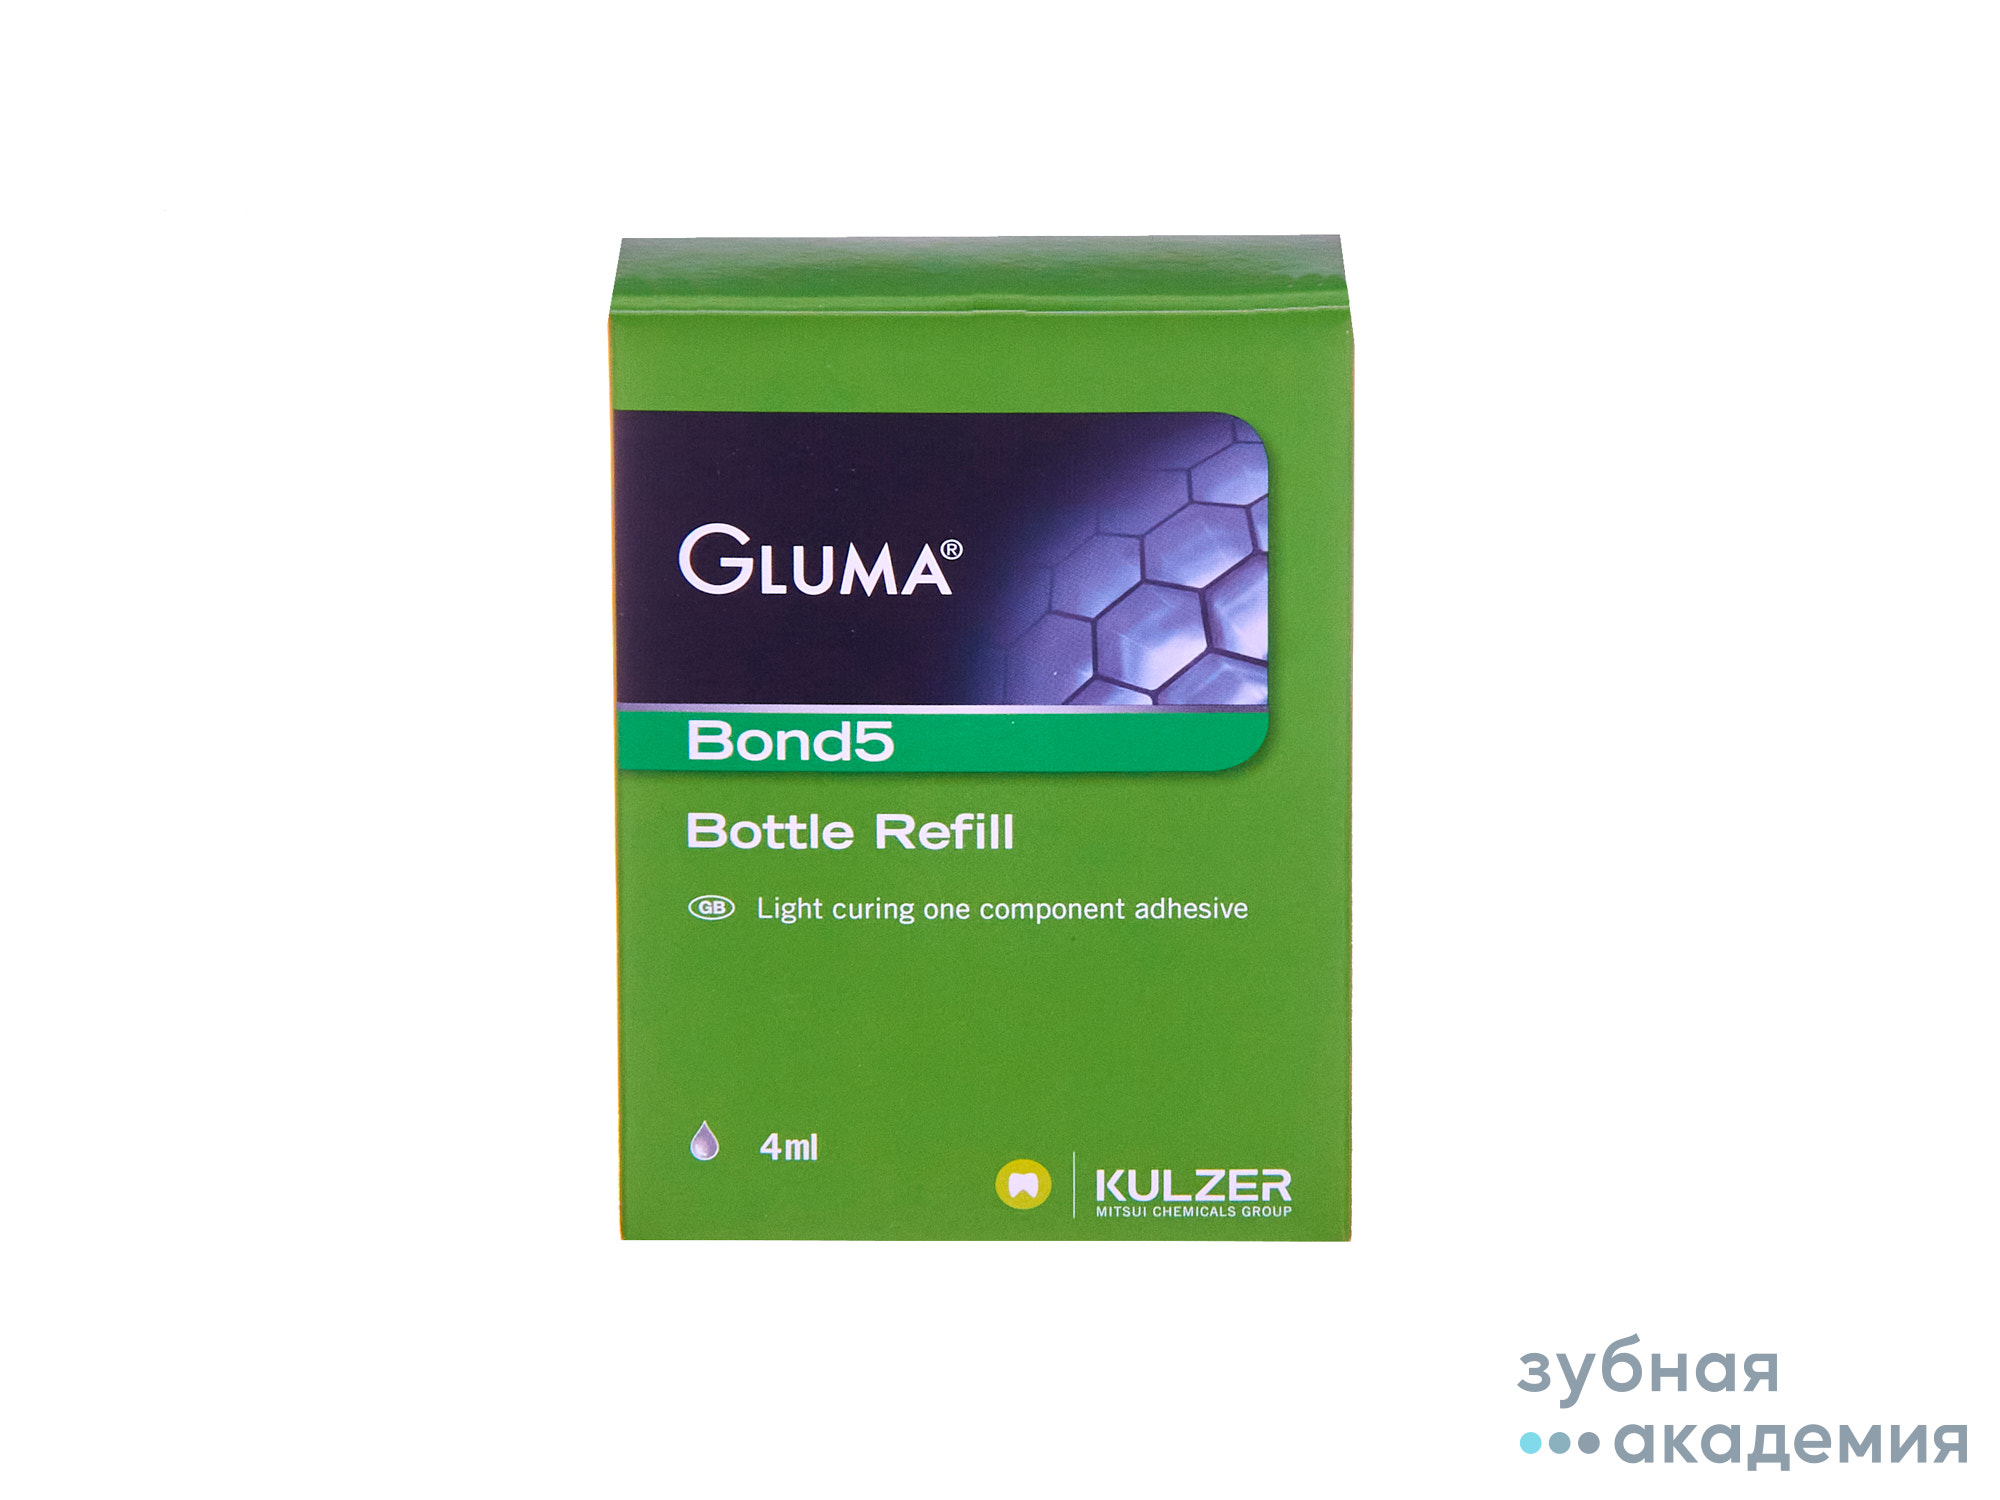 Адгезив GLUMA Bond5 Bottle Refill / ГЛУМА Бонд5 Ботл Рефил (4 мл) Kulzer/Германия